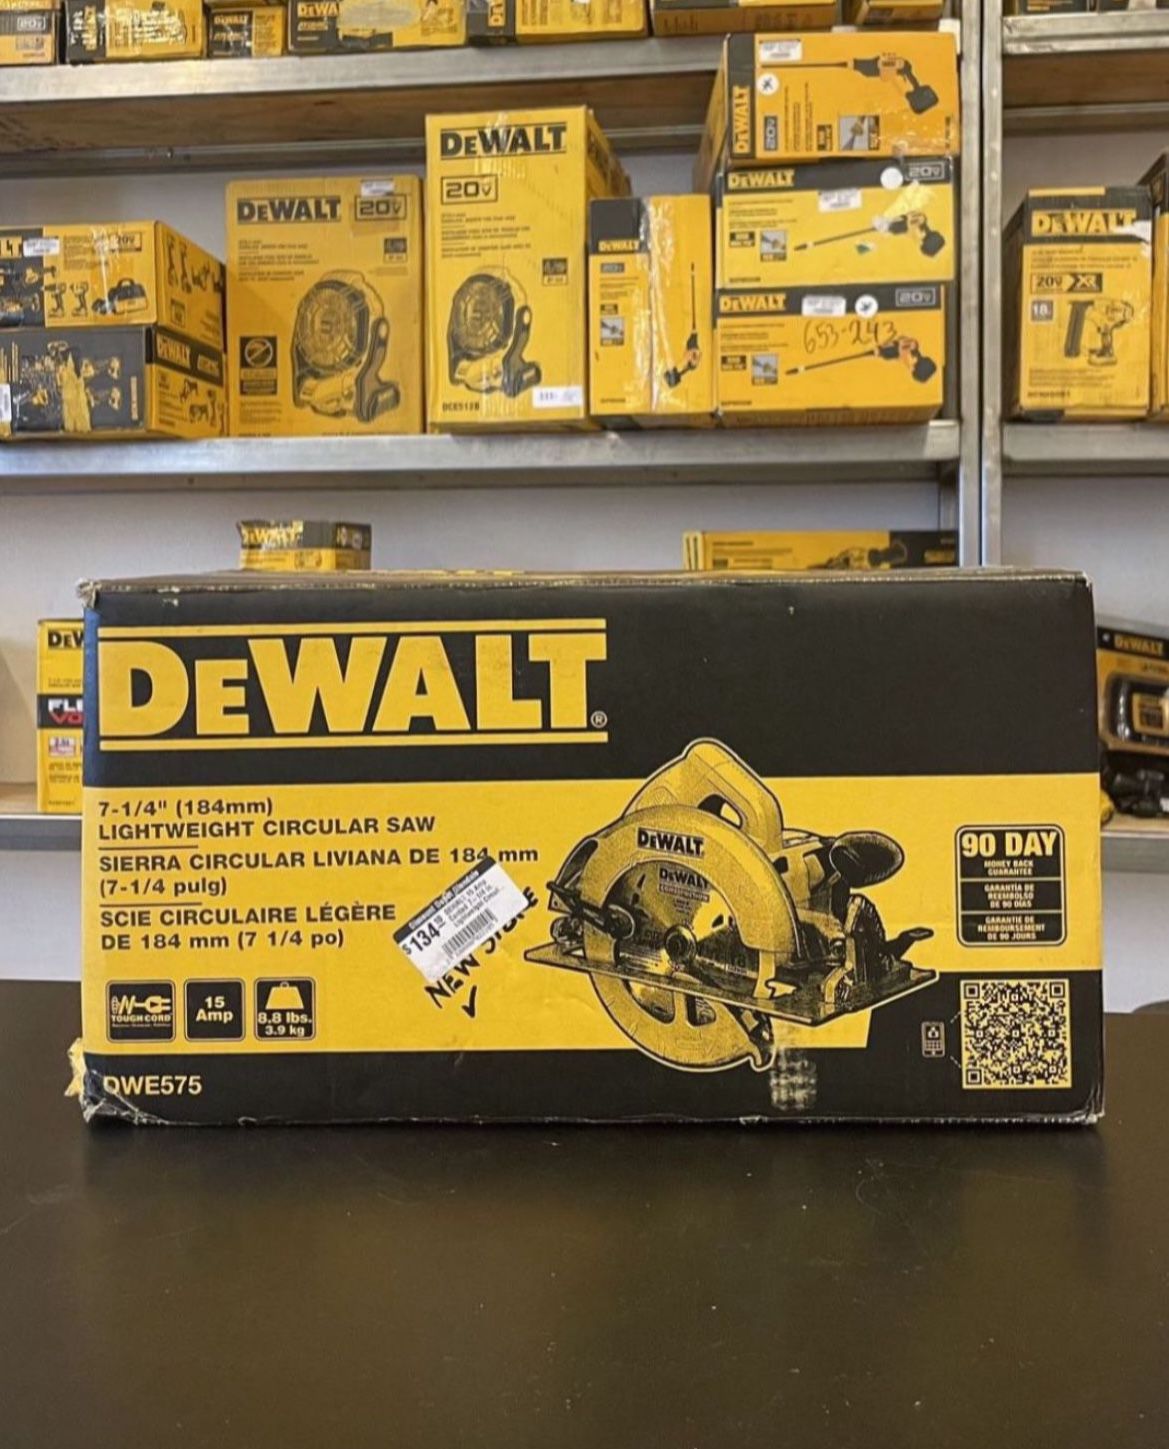 DEWALT 15 Amp Corded 7-1/4 in. Lightweight Circular Saw ……DWE575 for Sale in  Las Vegas, NV OfferUp